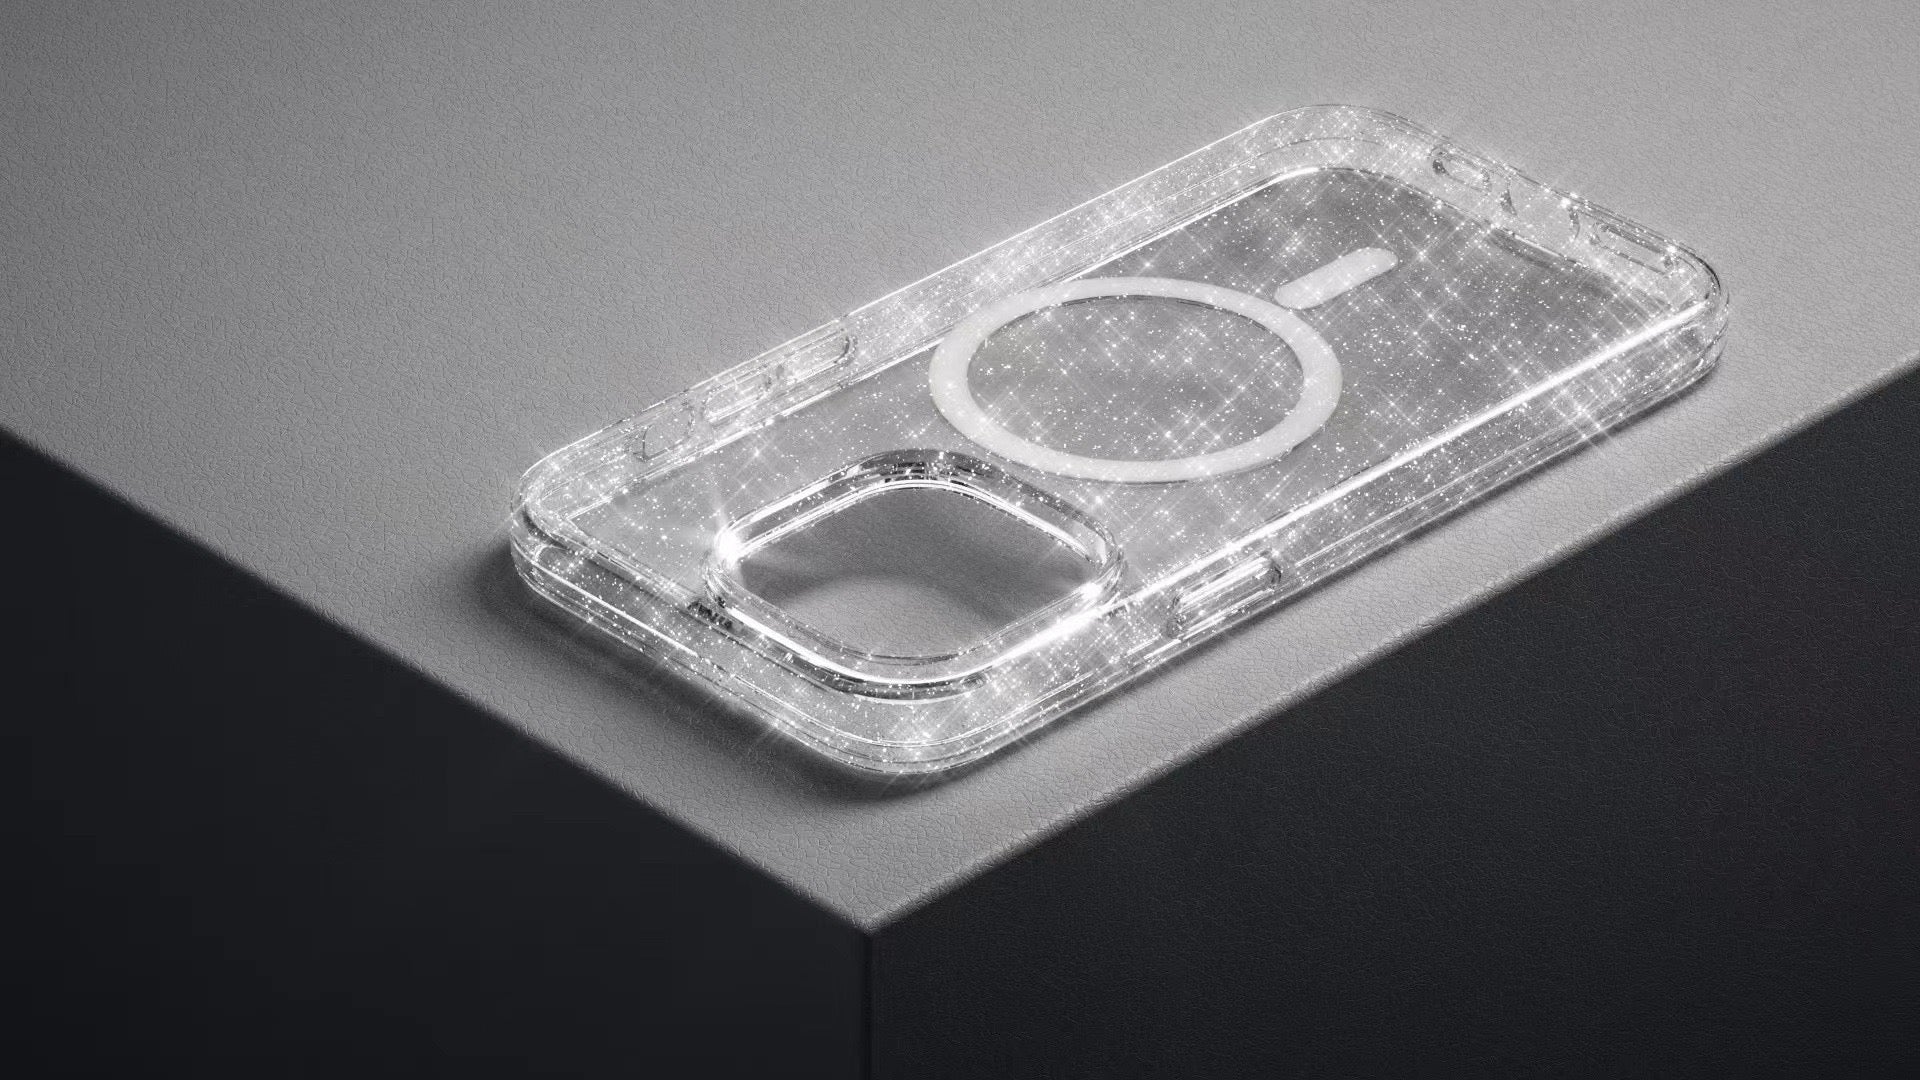 iPhone 12/12 Pro Terminator Magsafe Glitters Hard Clear Case